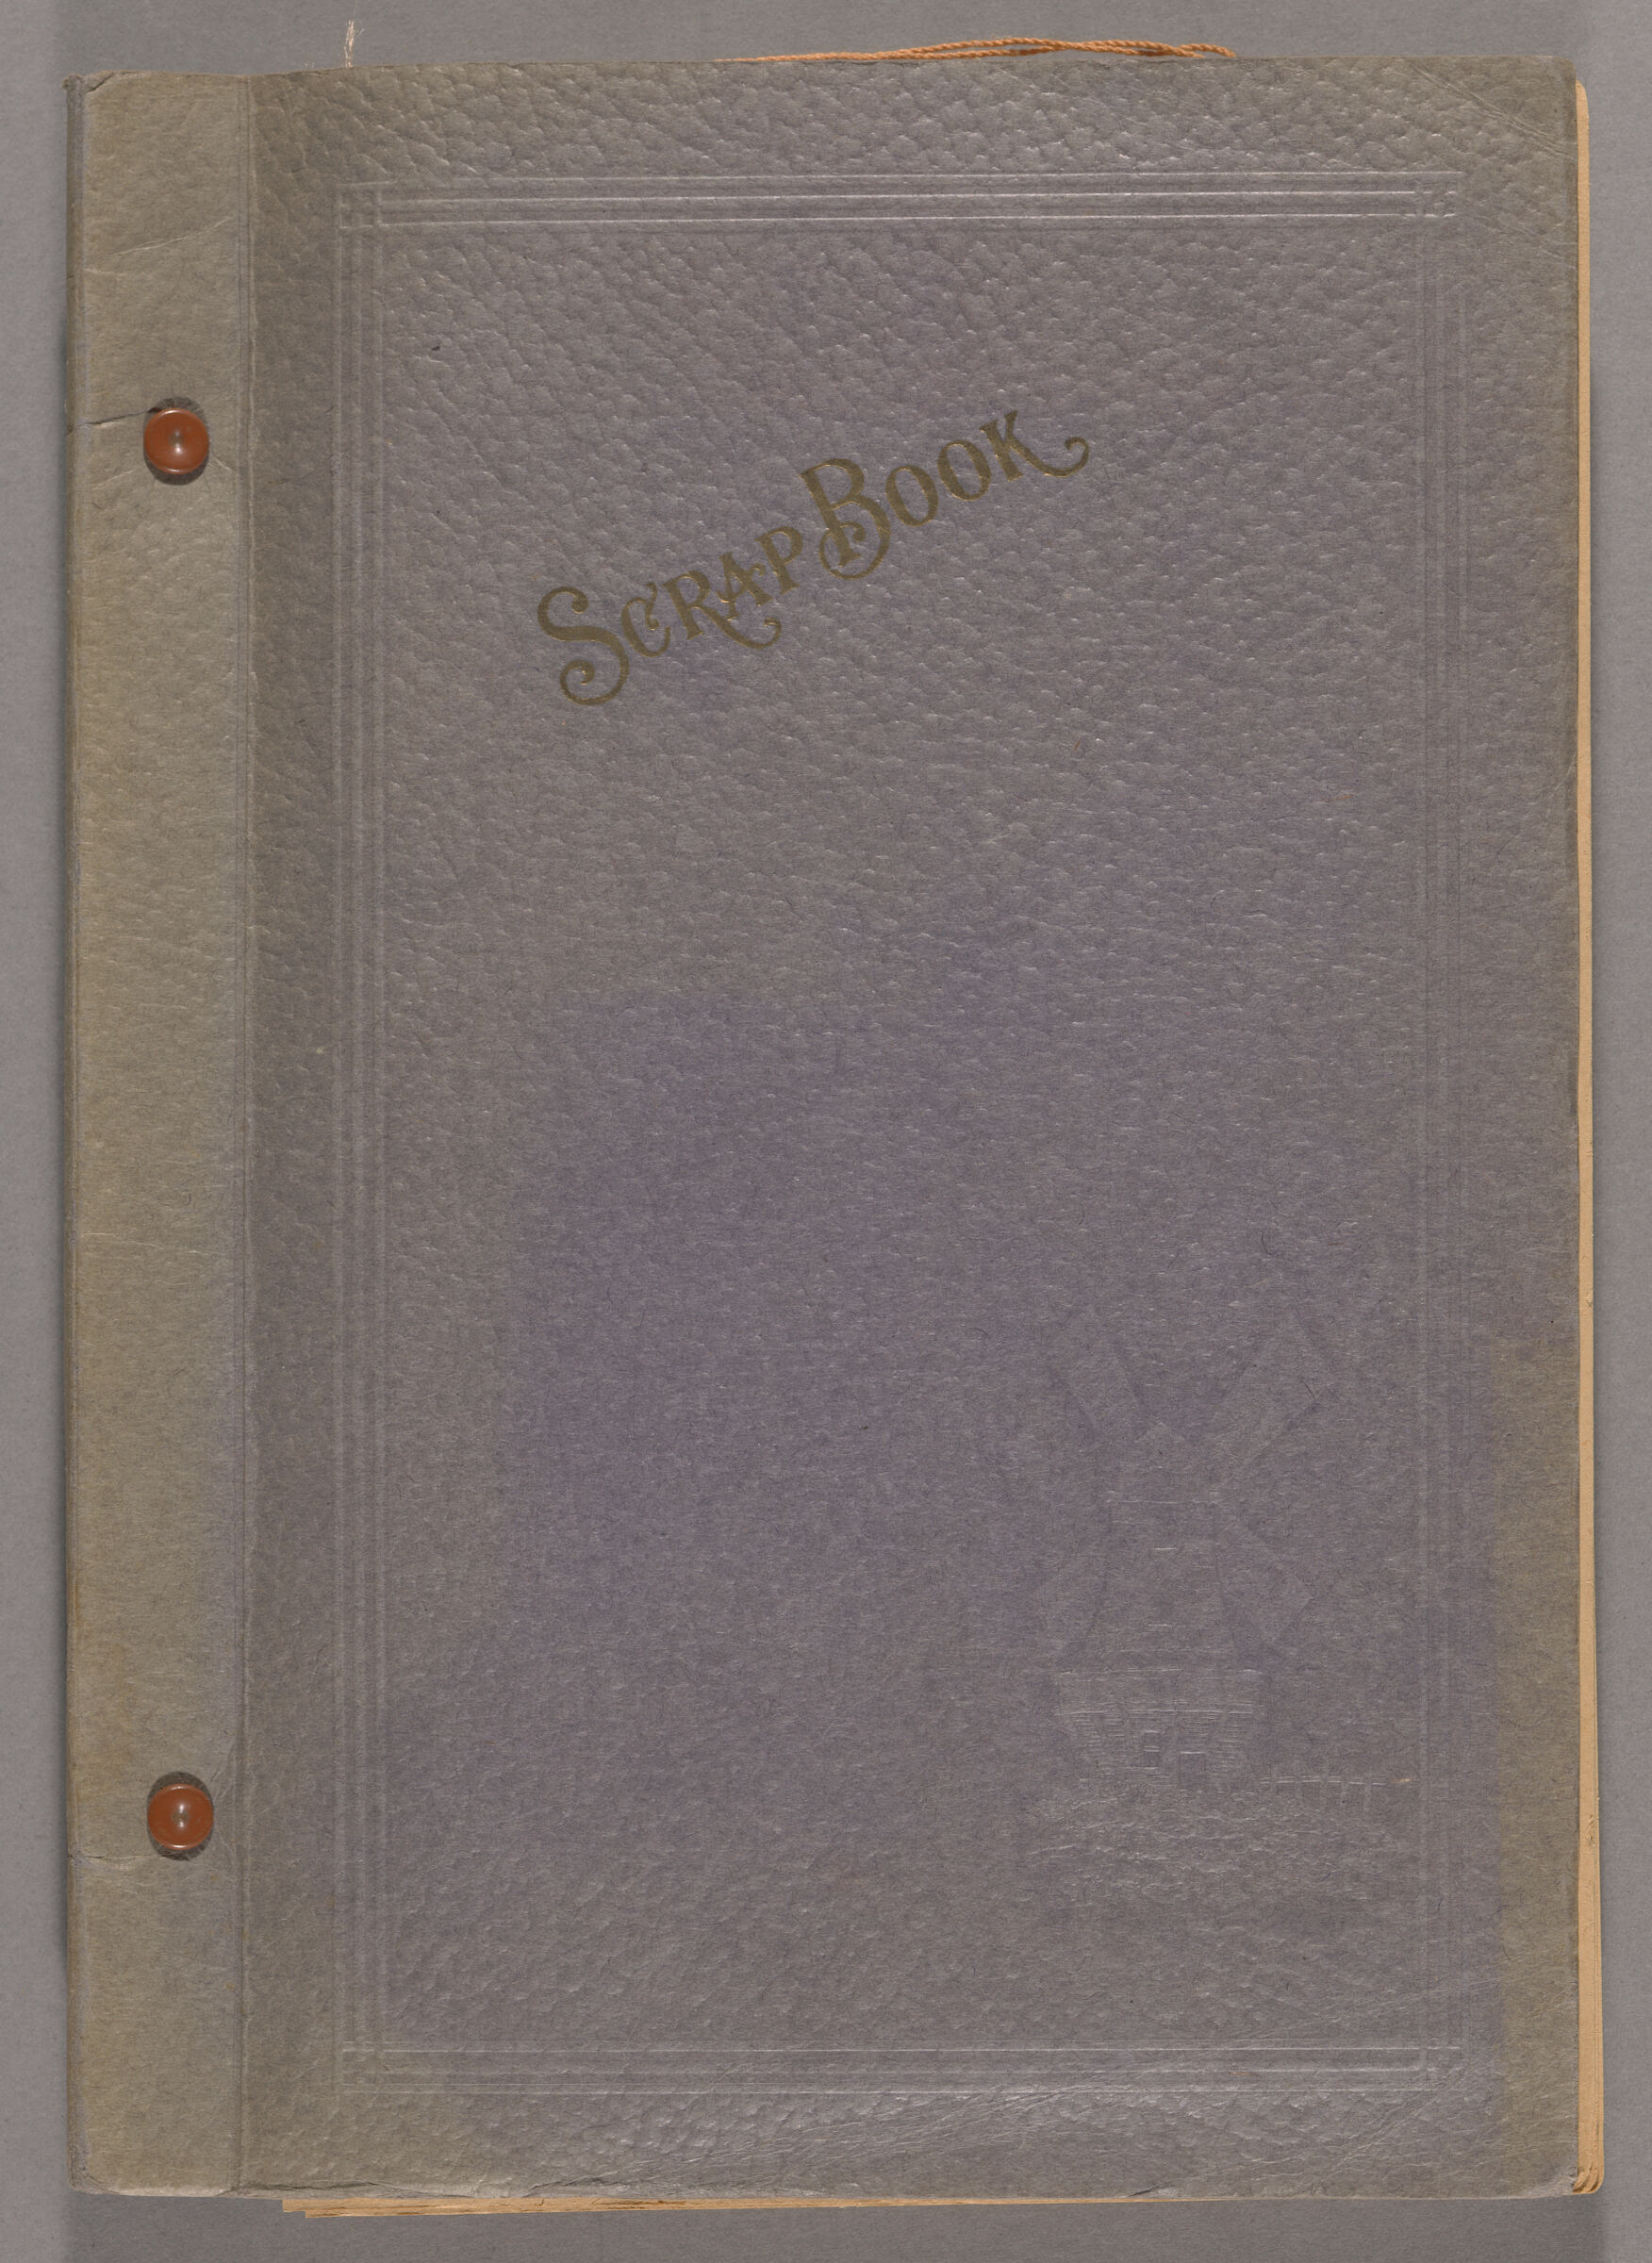 Janet Wien McAllister scrapbook, 1931-1935